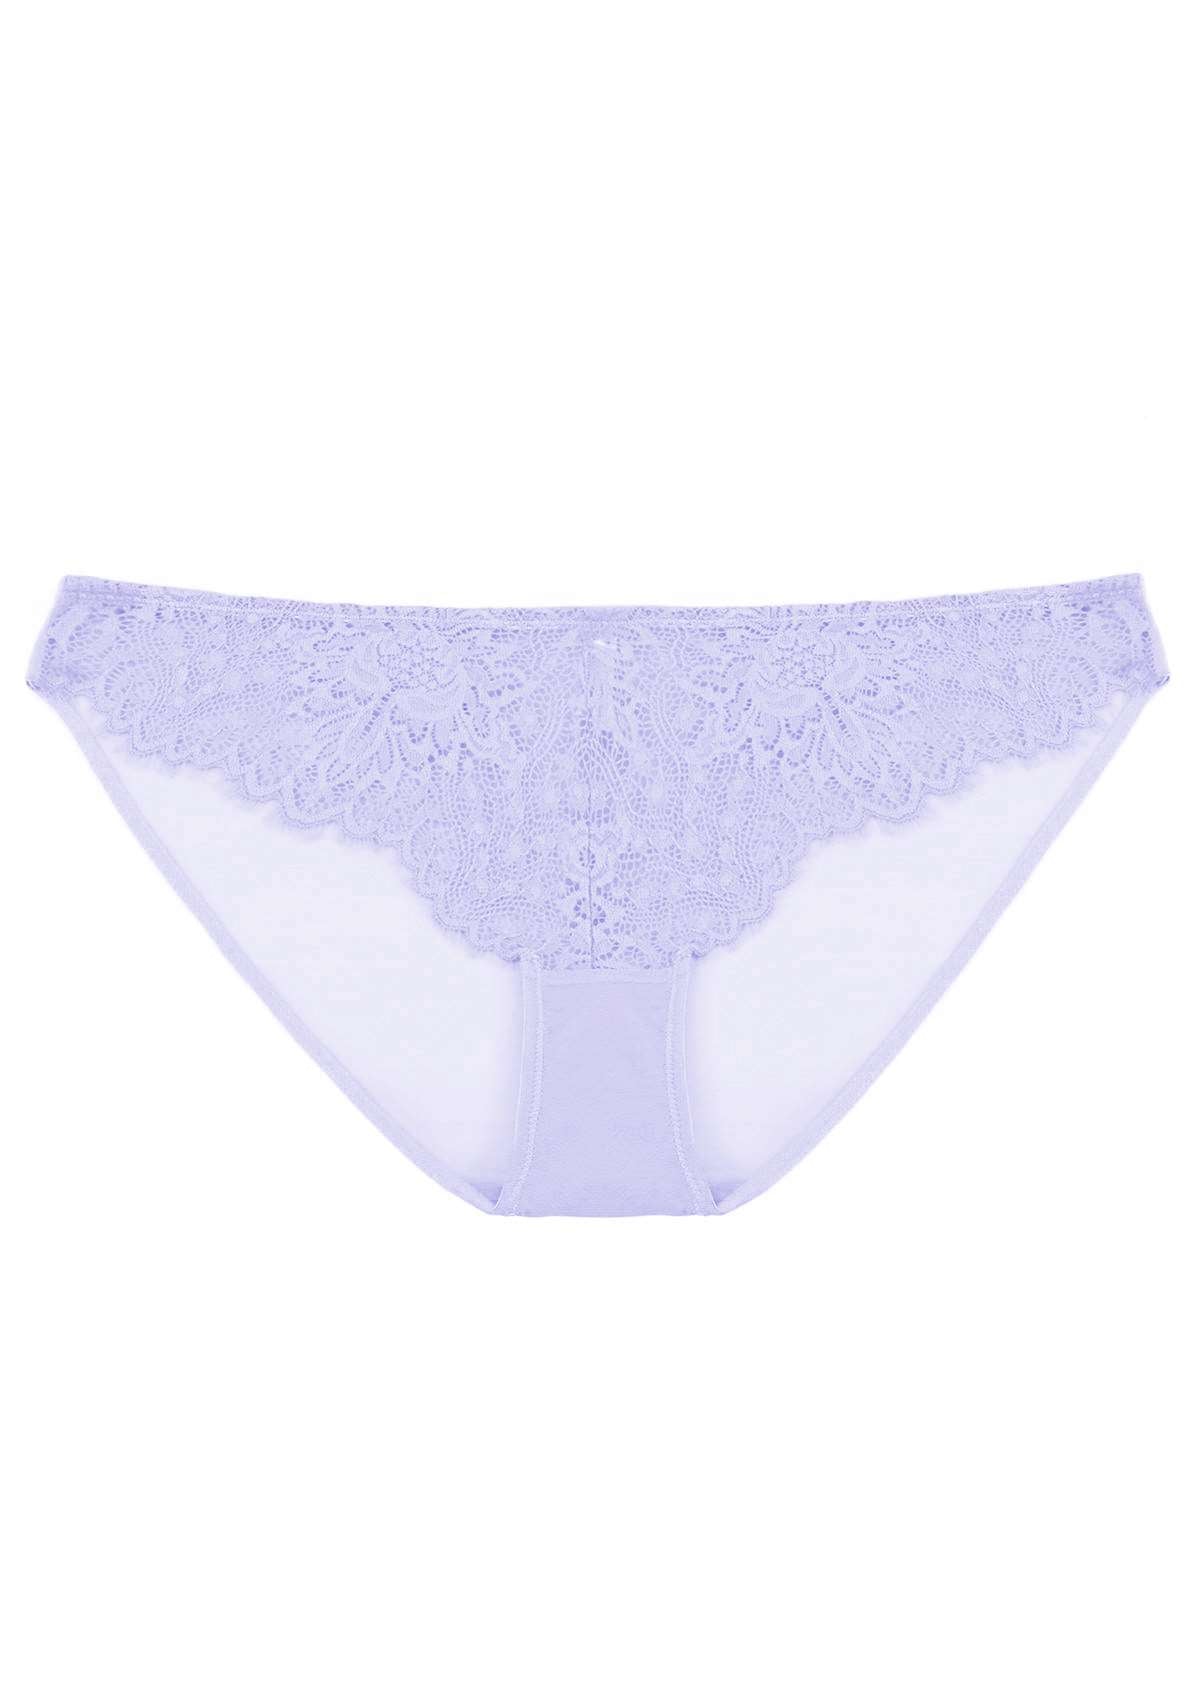 HSIA Sunflower Exquisite Purple Lace Bikini Underwear - XXXL / Purple